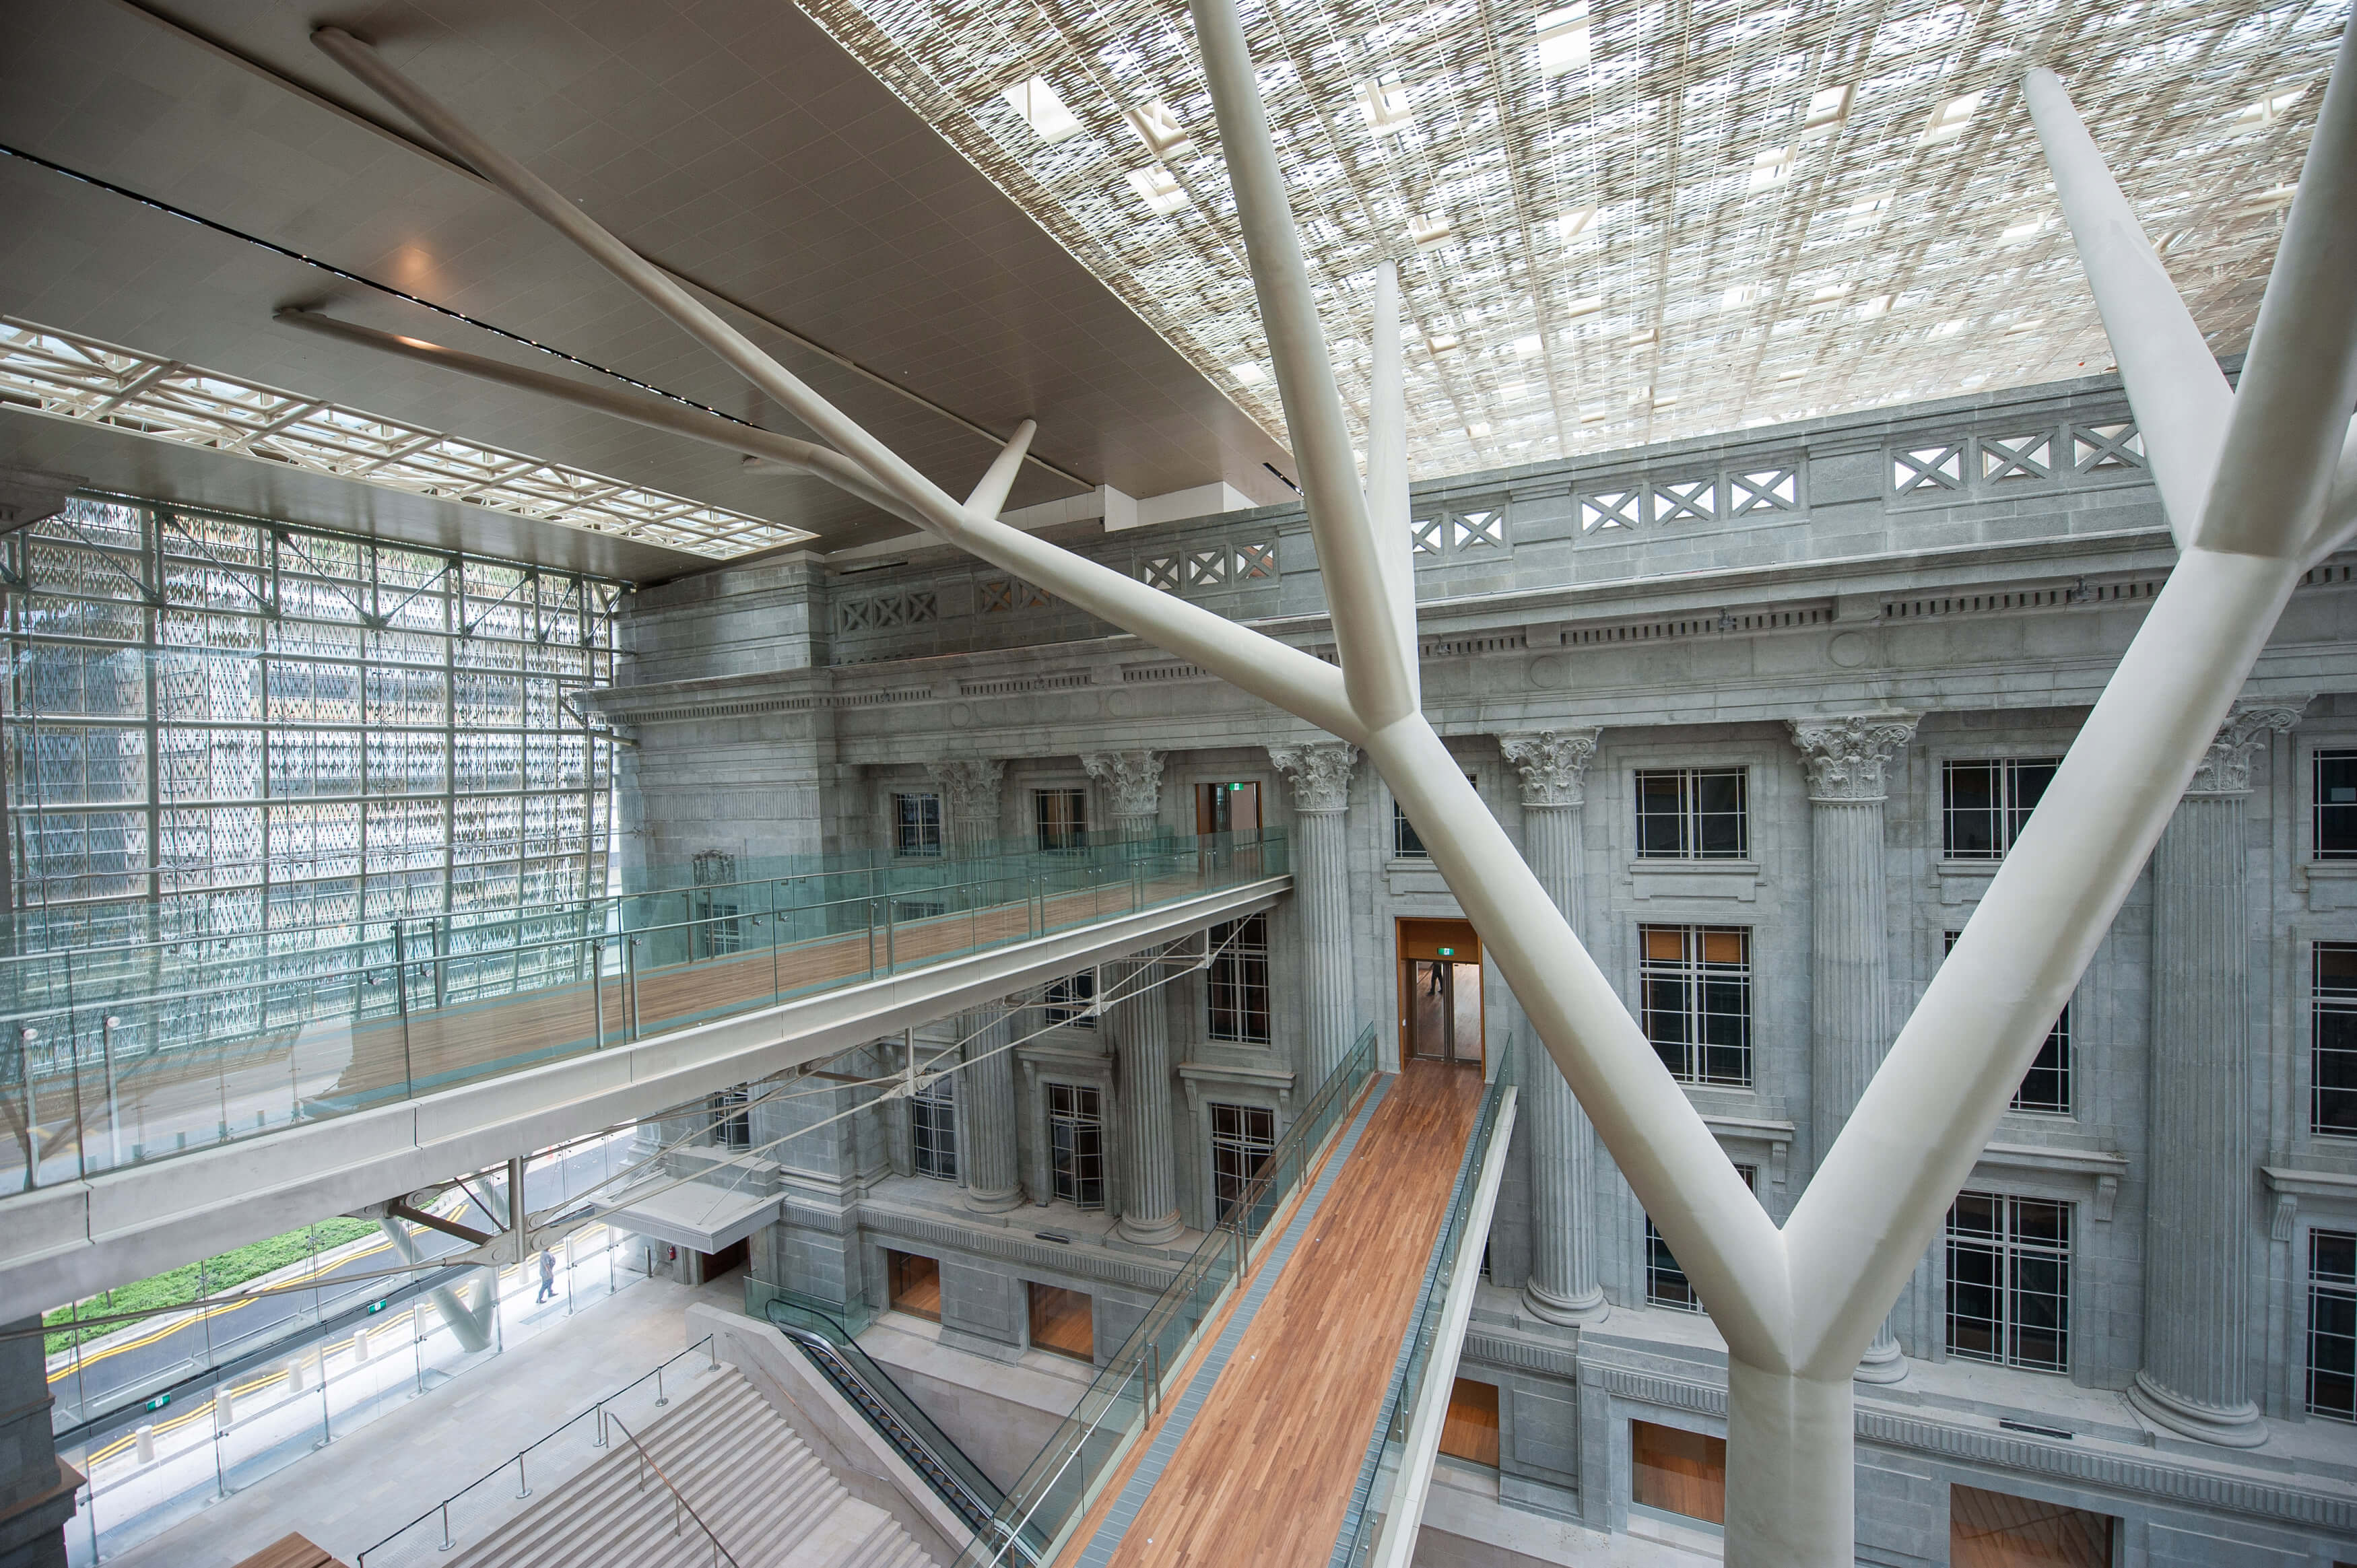 Architecture of National Gallery Singapore—artnet News